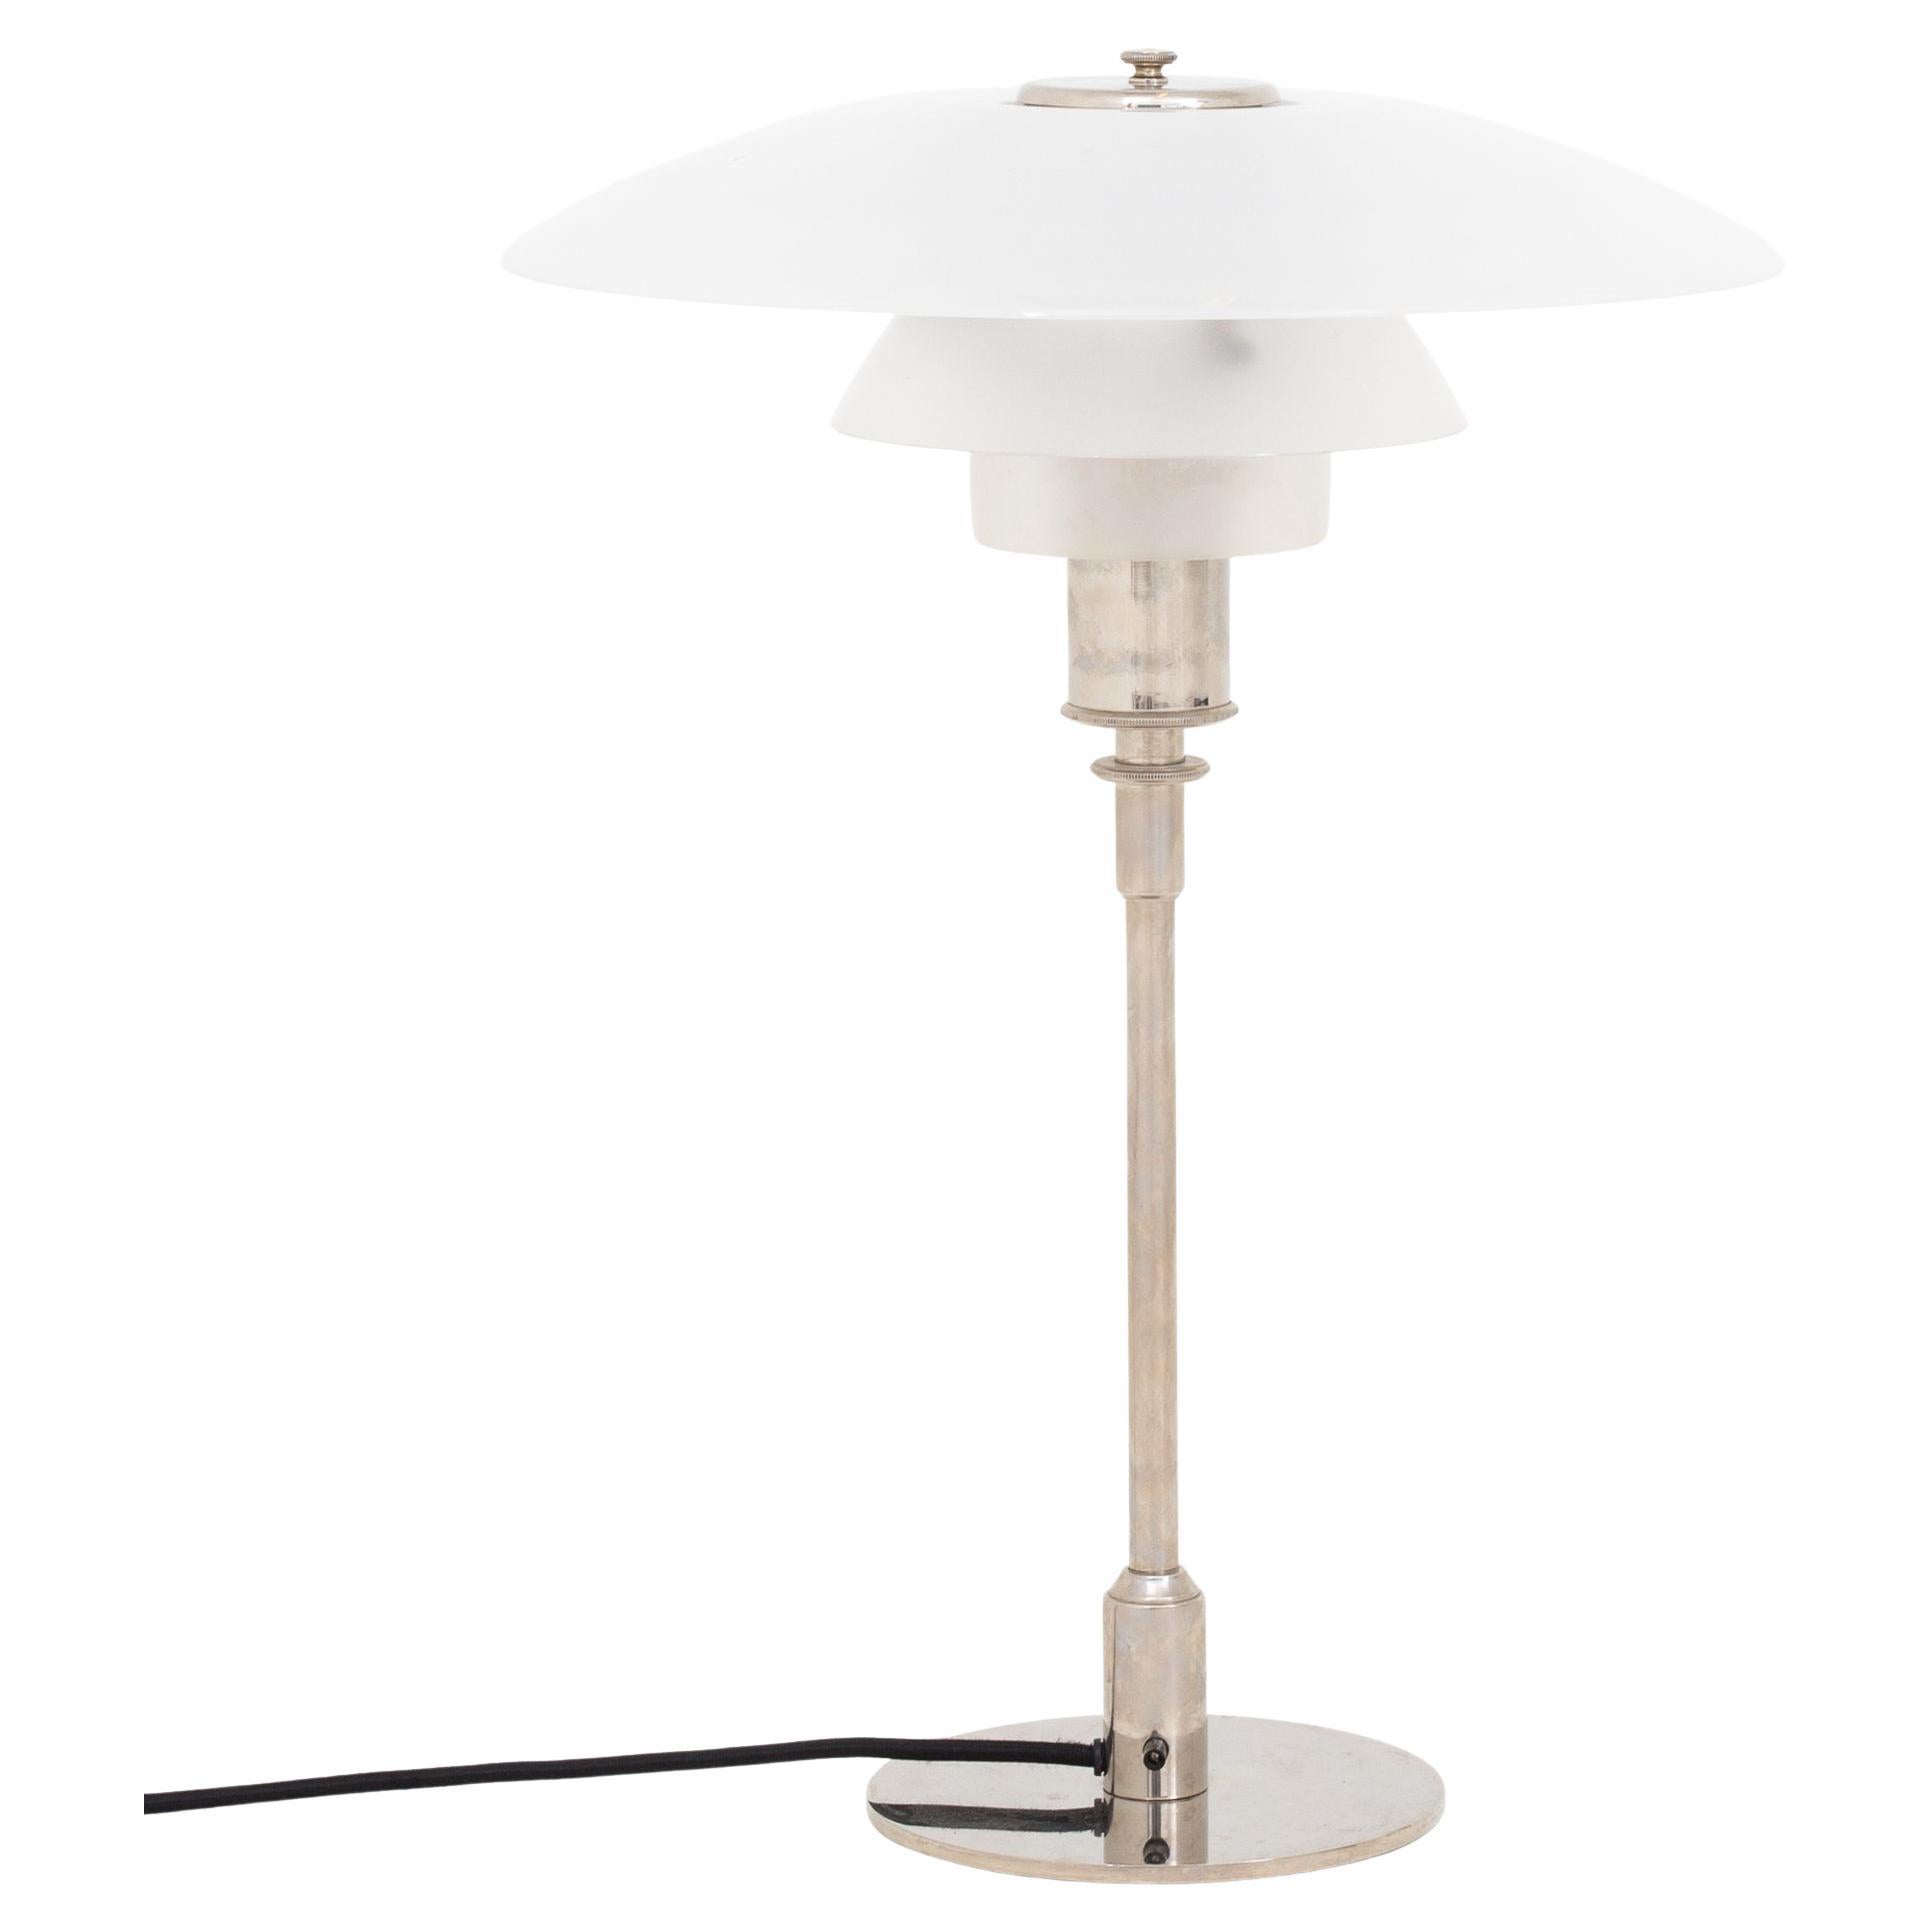 Ph 4/3 Table Lamp by Poul Henningsen